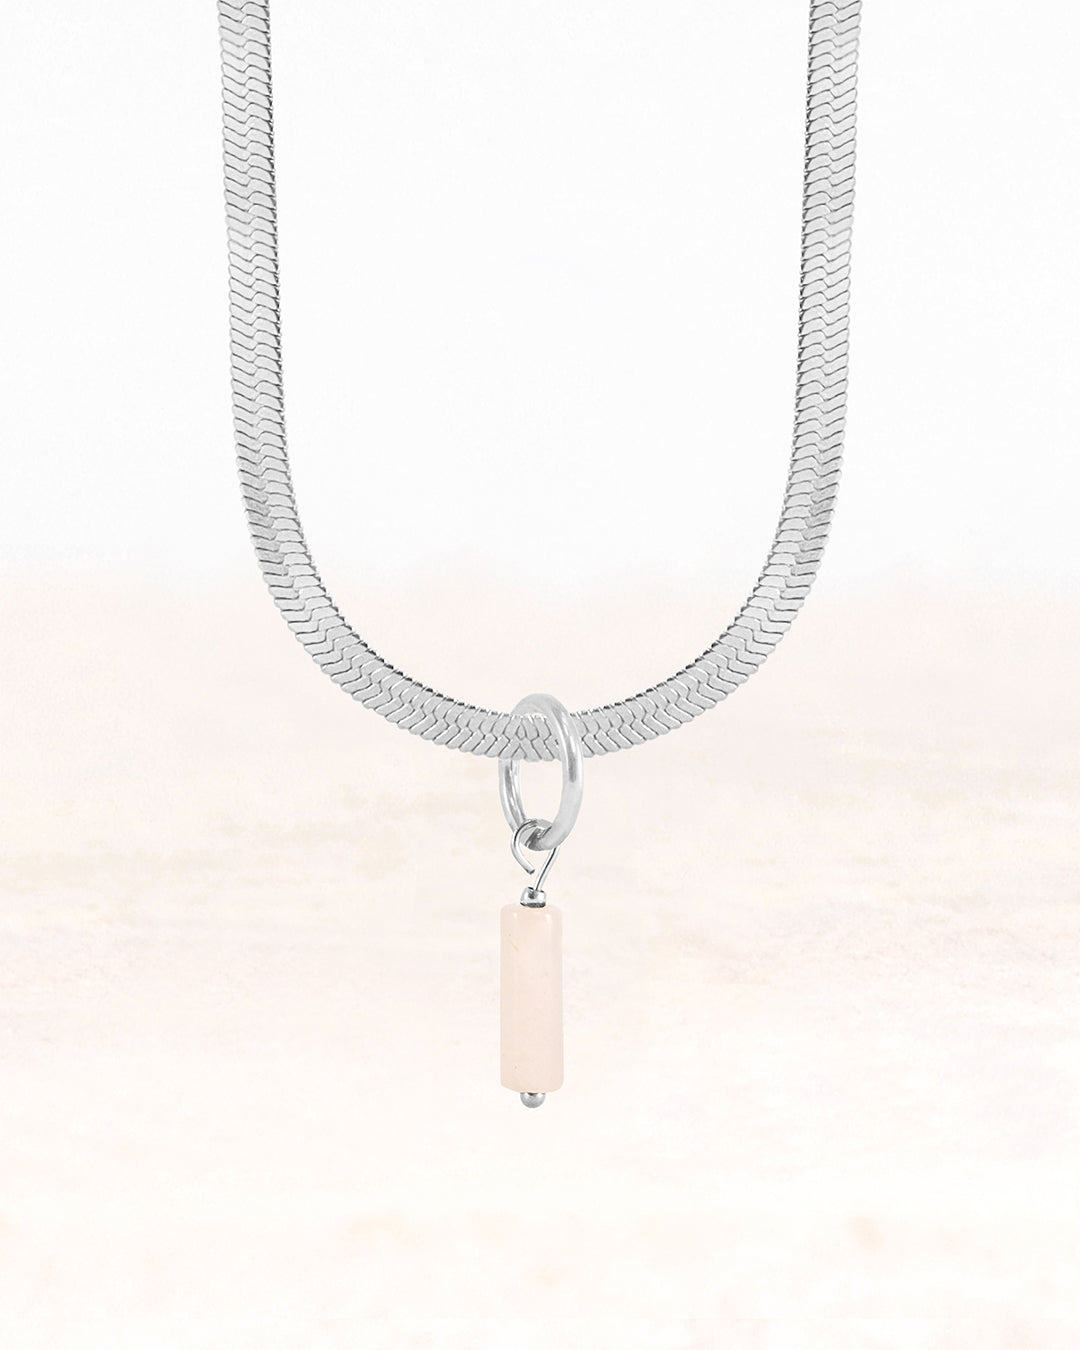 CUS® Jewellery Set Mira necklace 3mm and Gaia charm Milky Quartz - Vitality & Purity